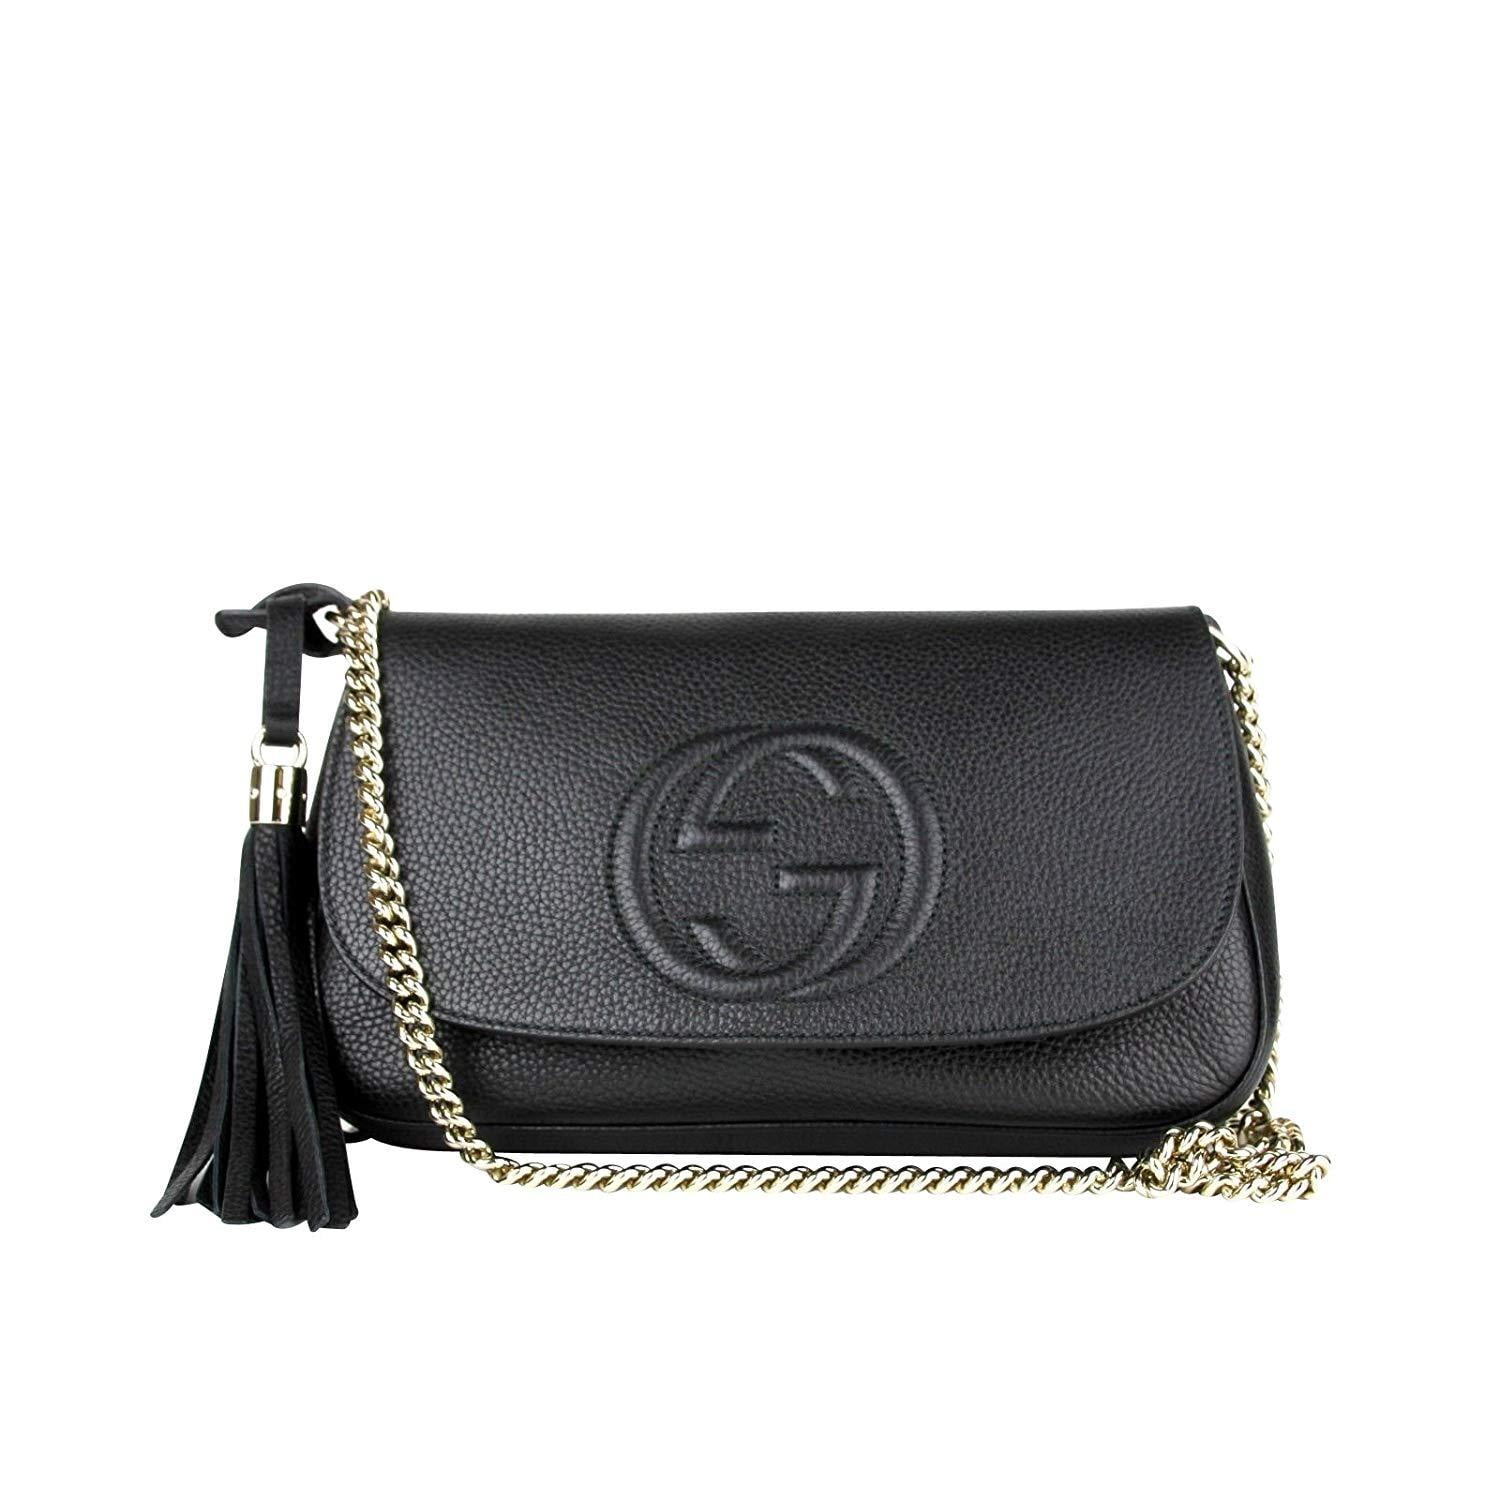 Gucci Interlocking G Chain Shoulder Bag on SALE